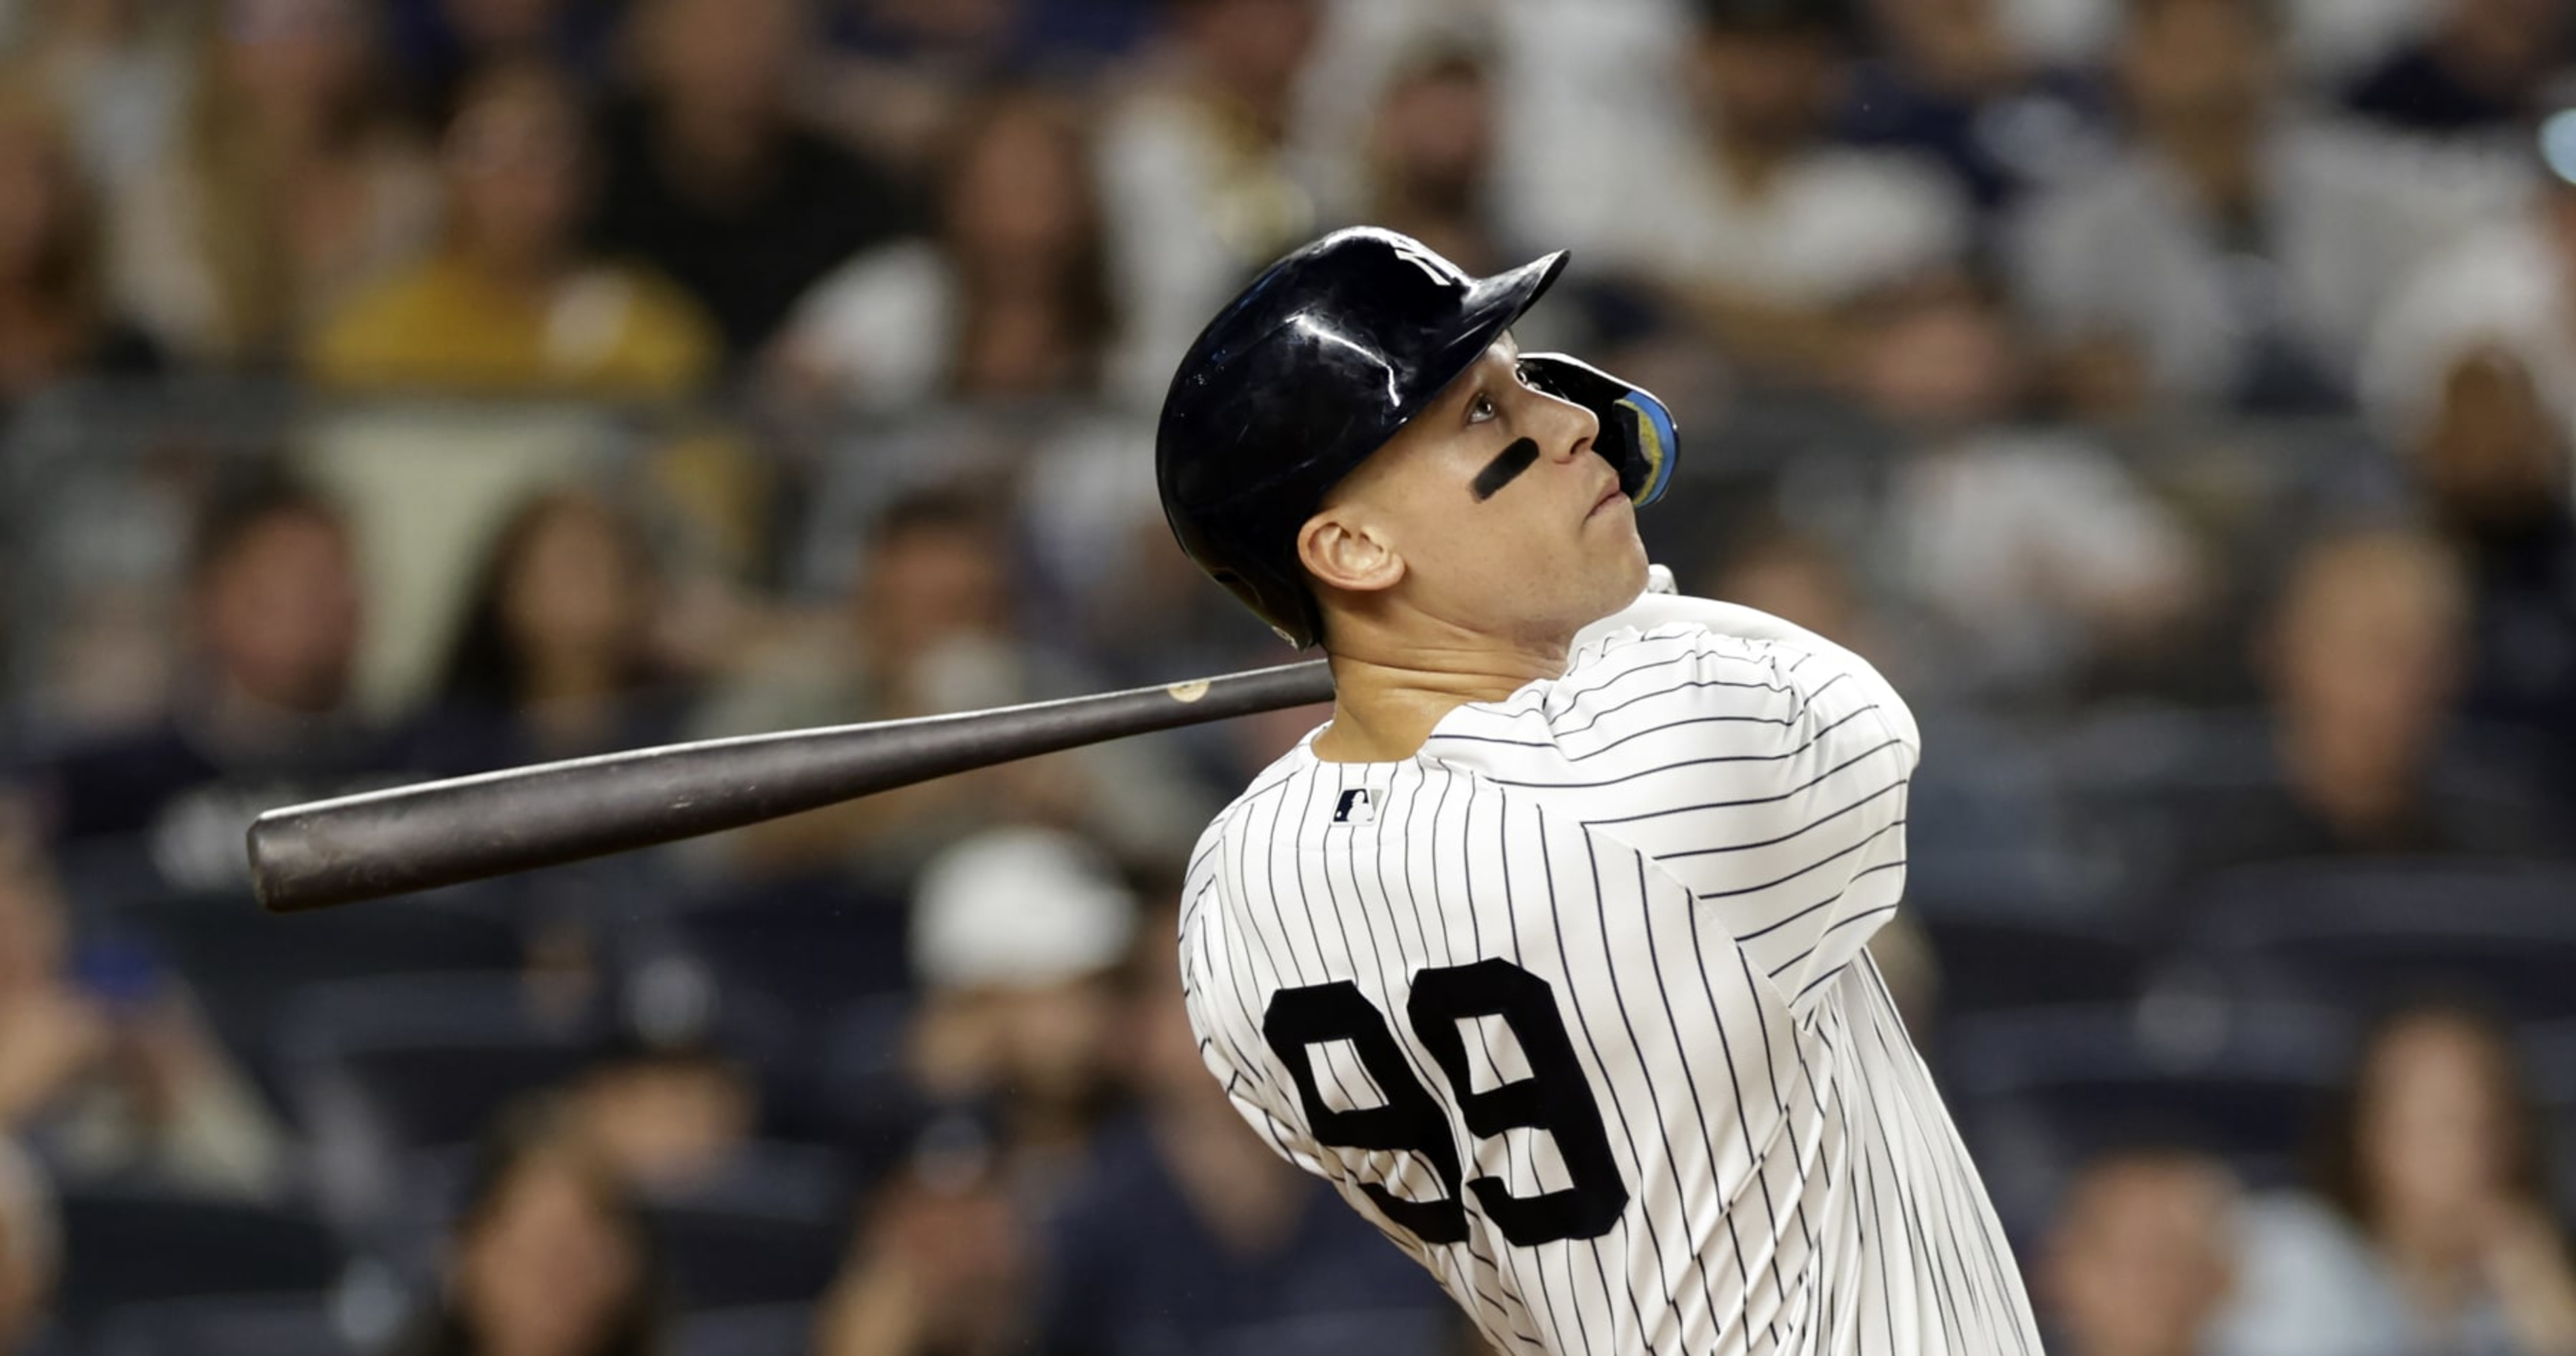 He didn't b***h': Yankees legend reveals moment Aaron Judge showed